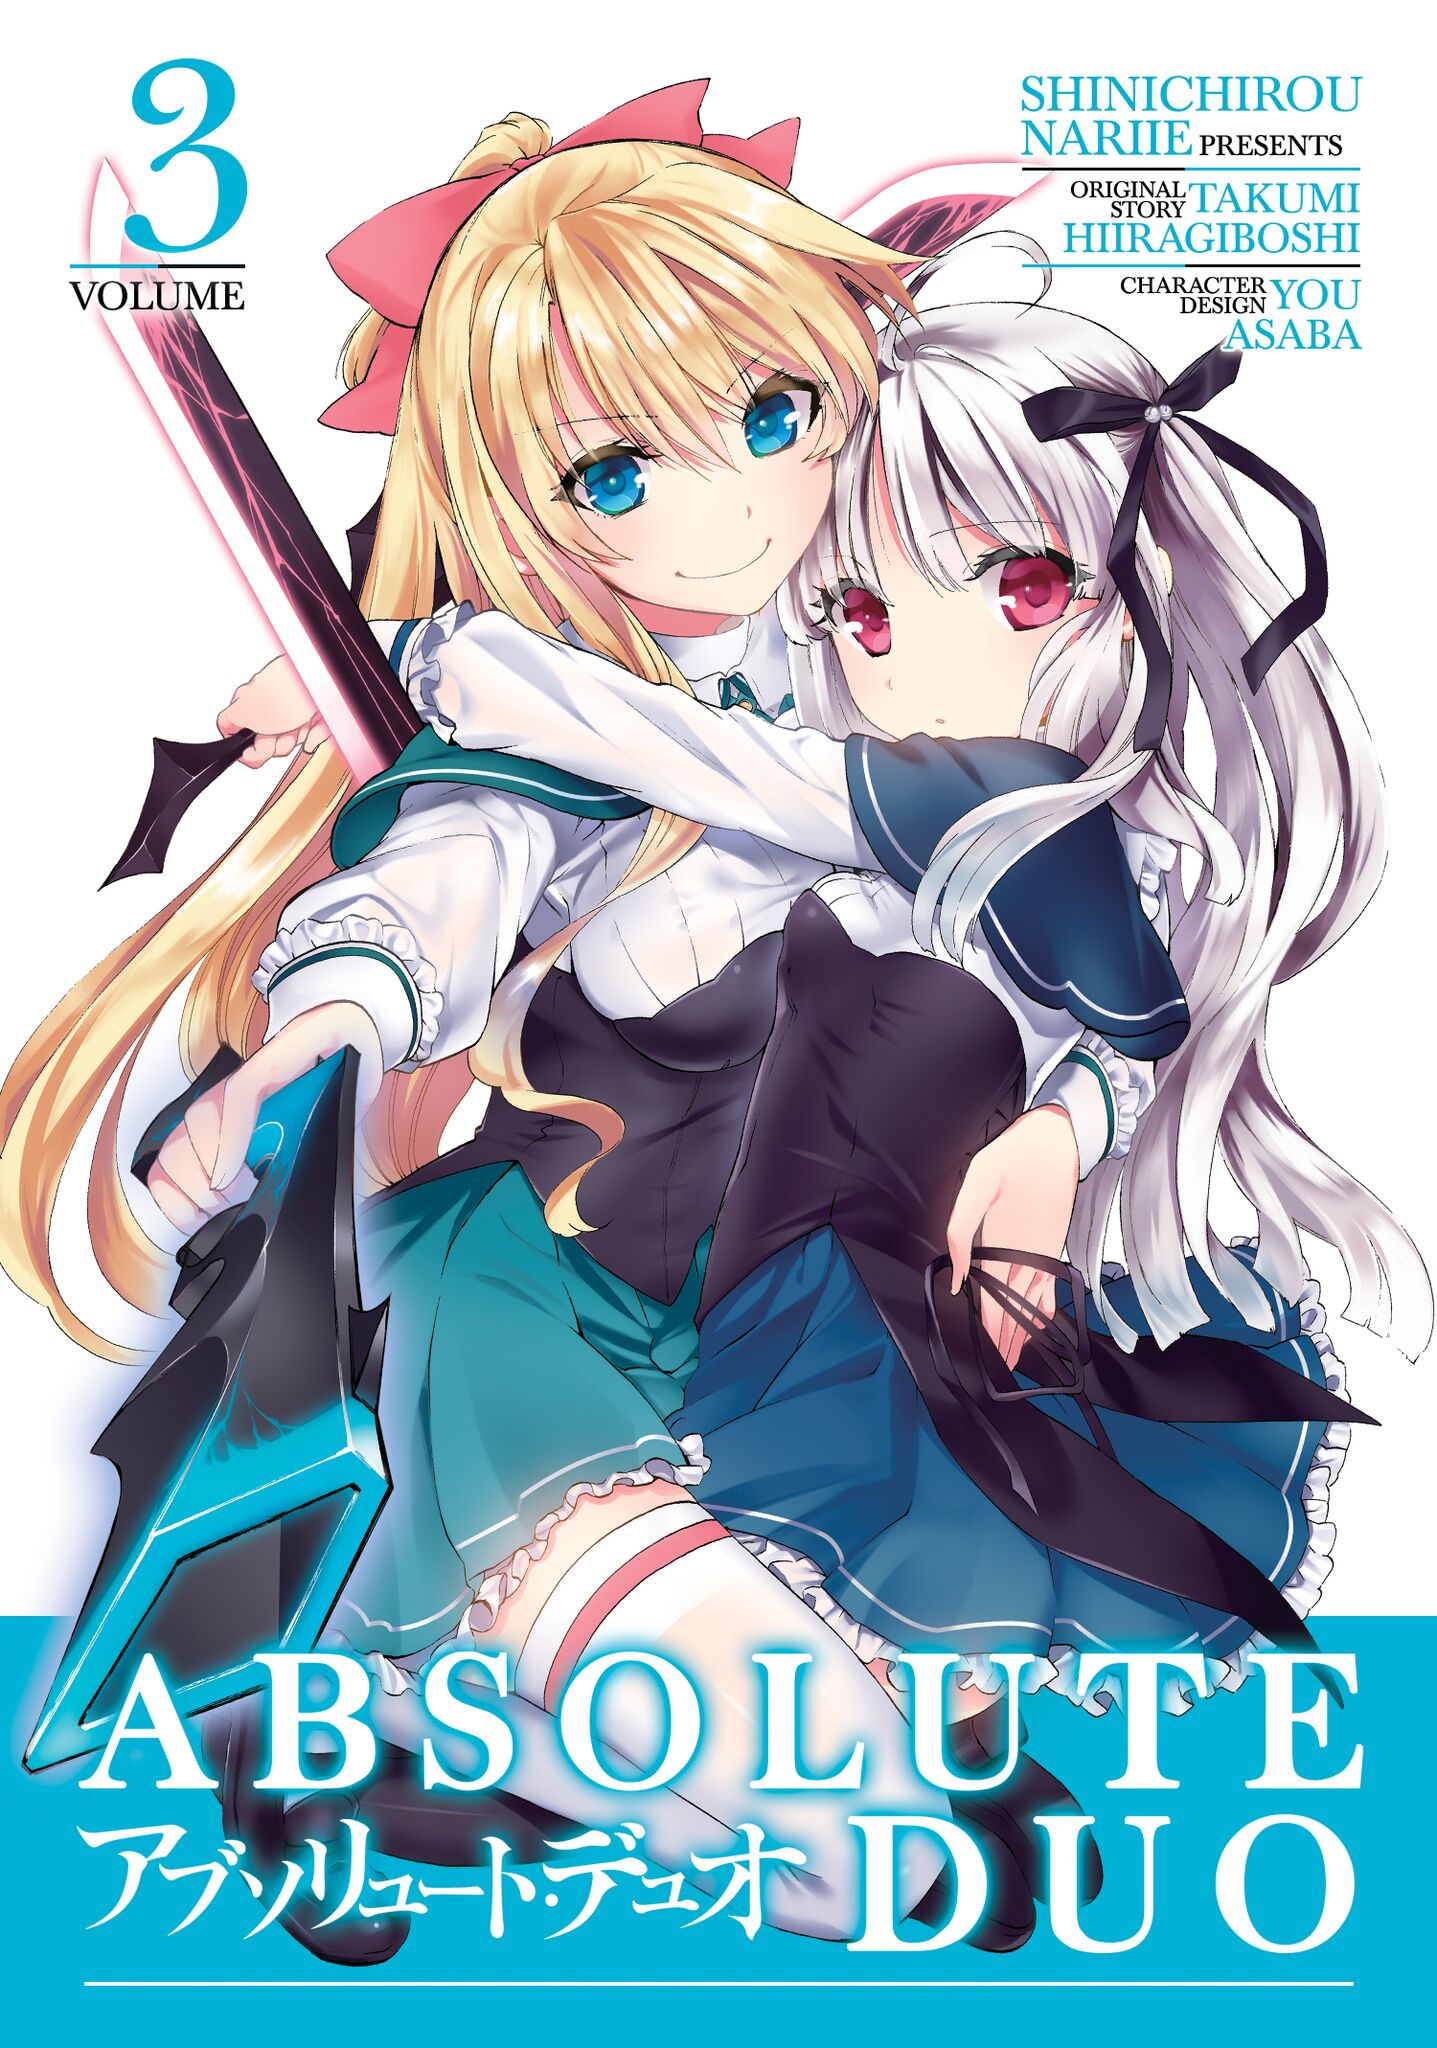 Download Absolute Duo Light Novel PDF - jnovels